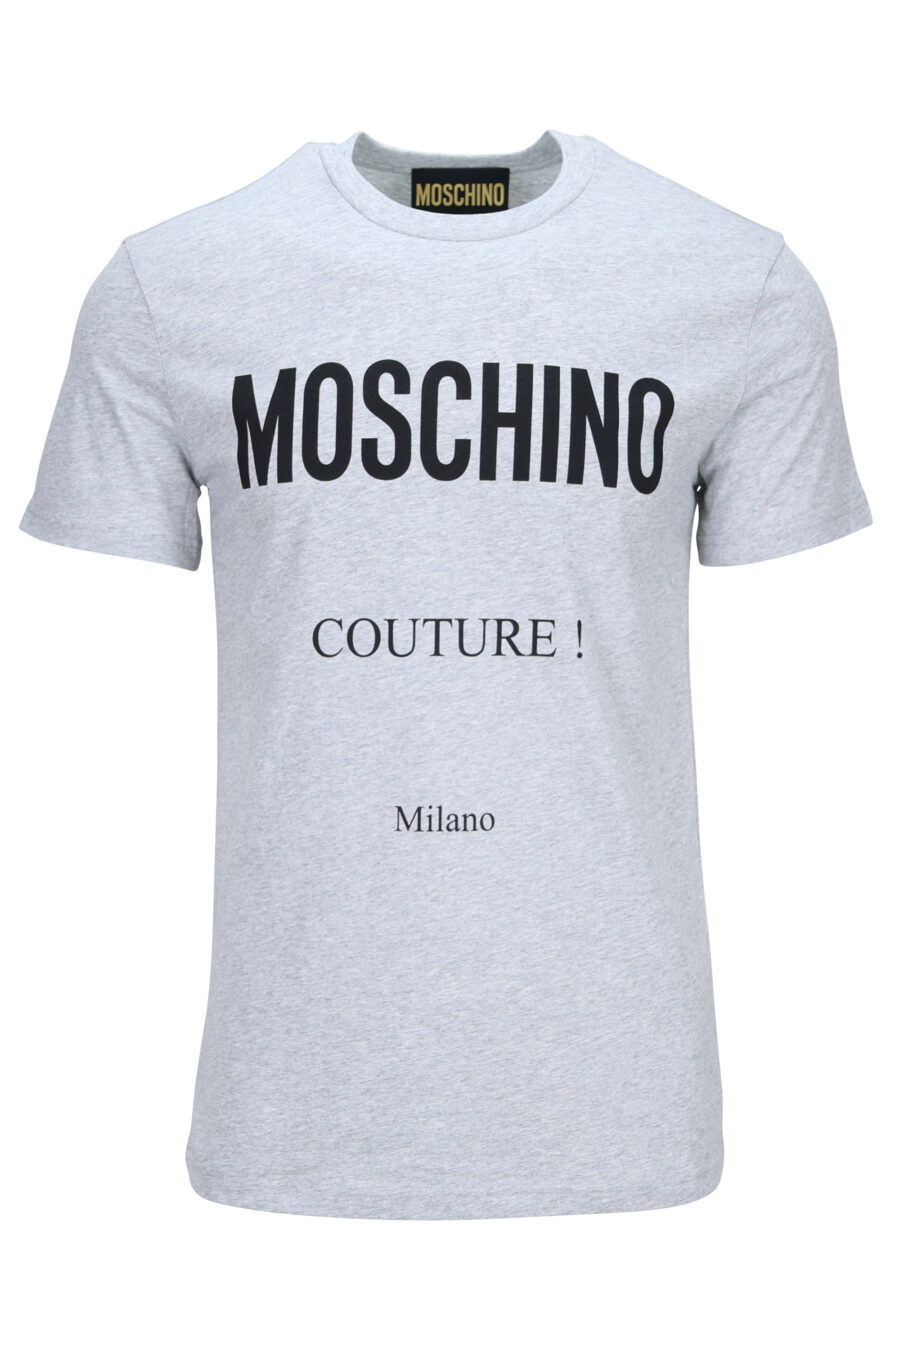 Graues T-Shirt mit Maxilogue "couture milano" - 889316936414